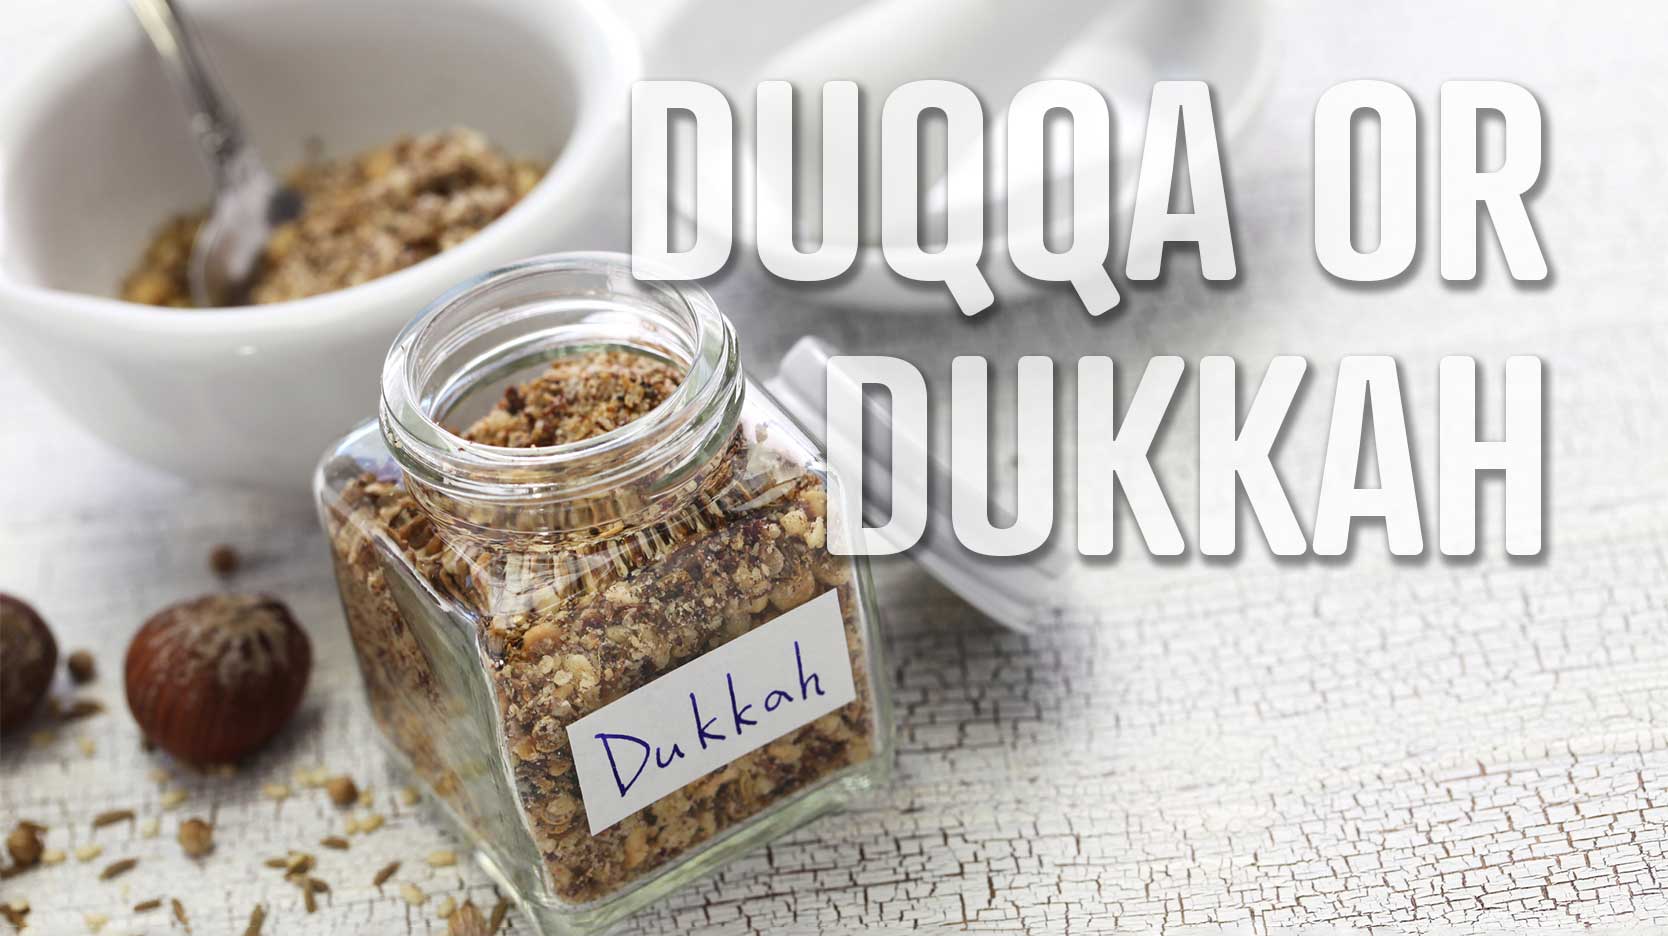 foods that start with D duqqa dukkah